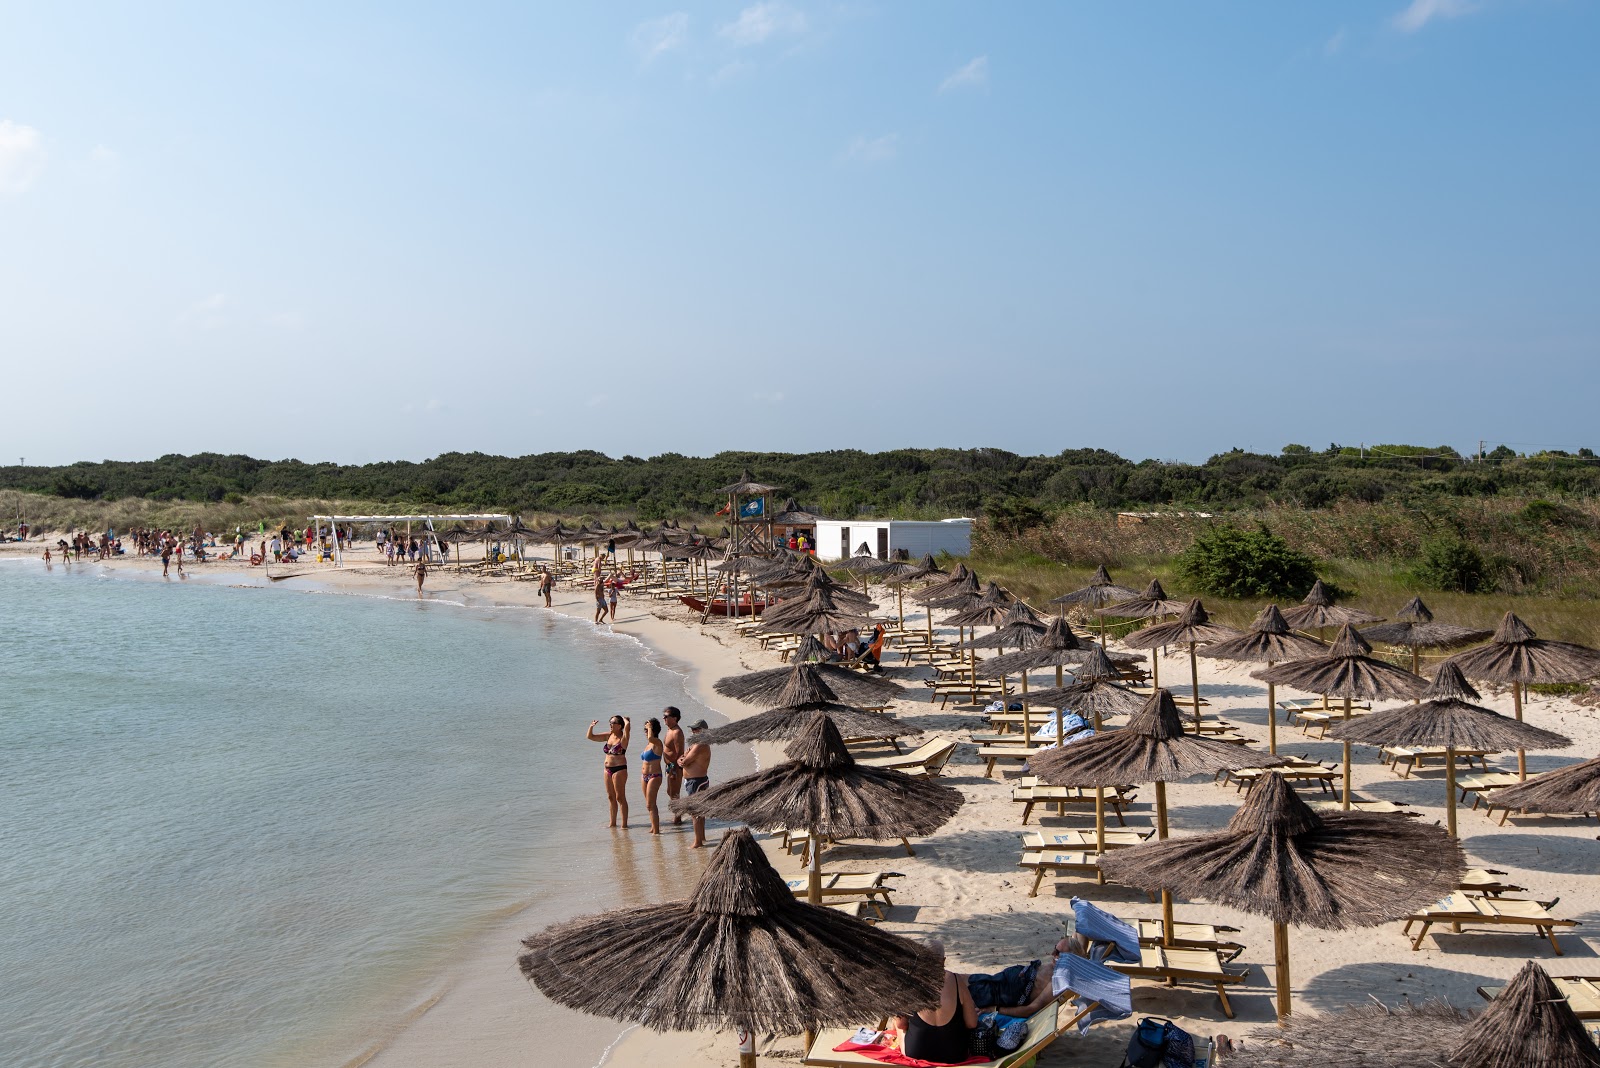 Fotografie cu Punta Penna beach cu nivelul de curățenie in medie